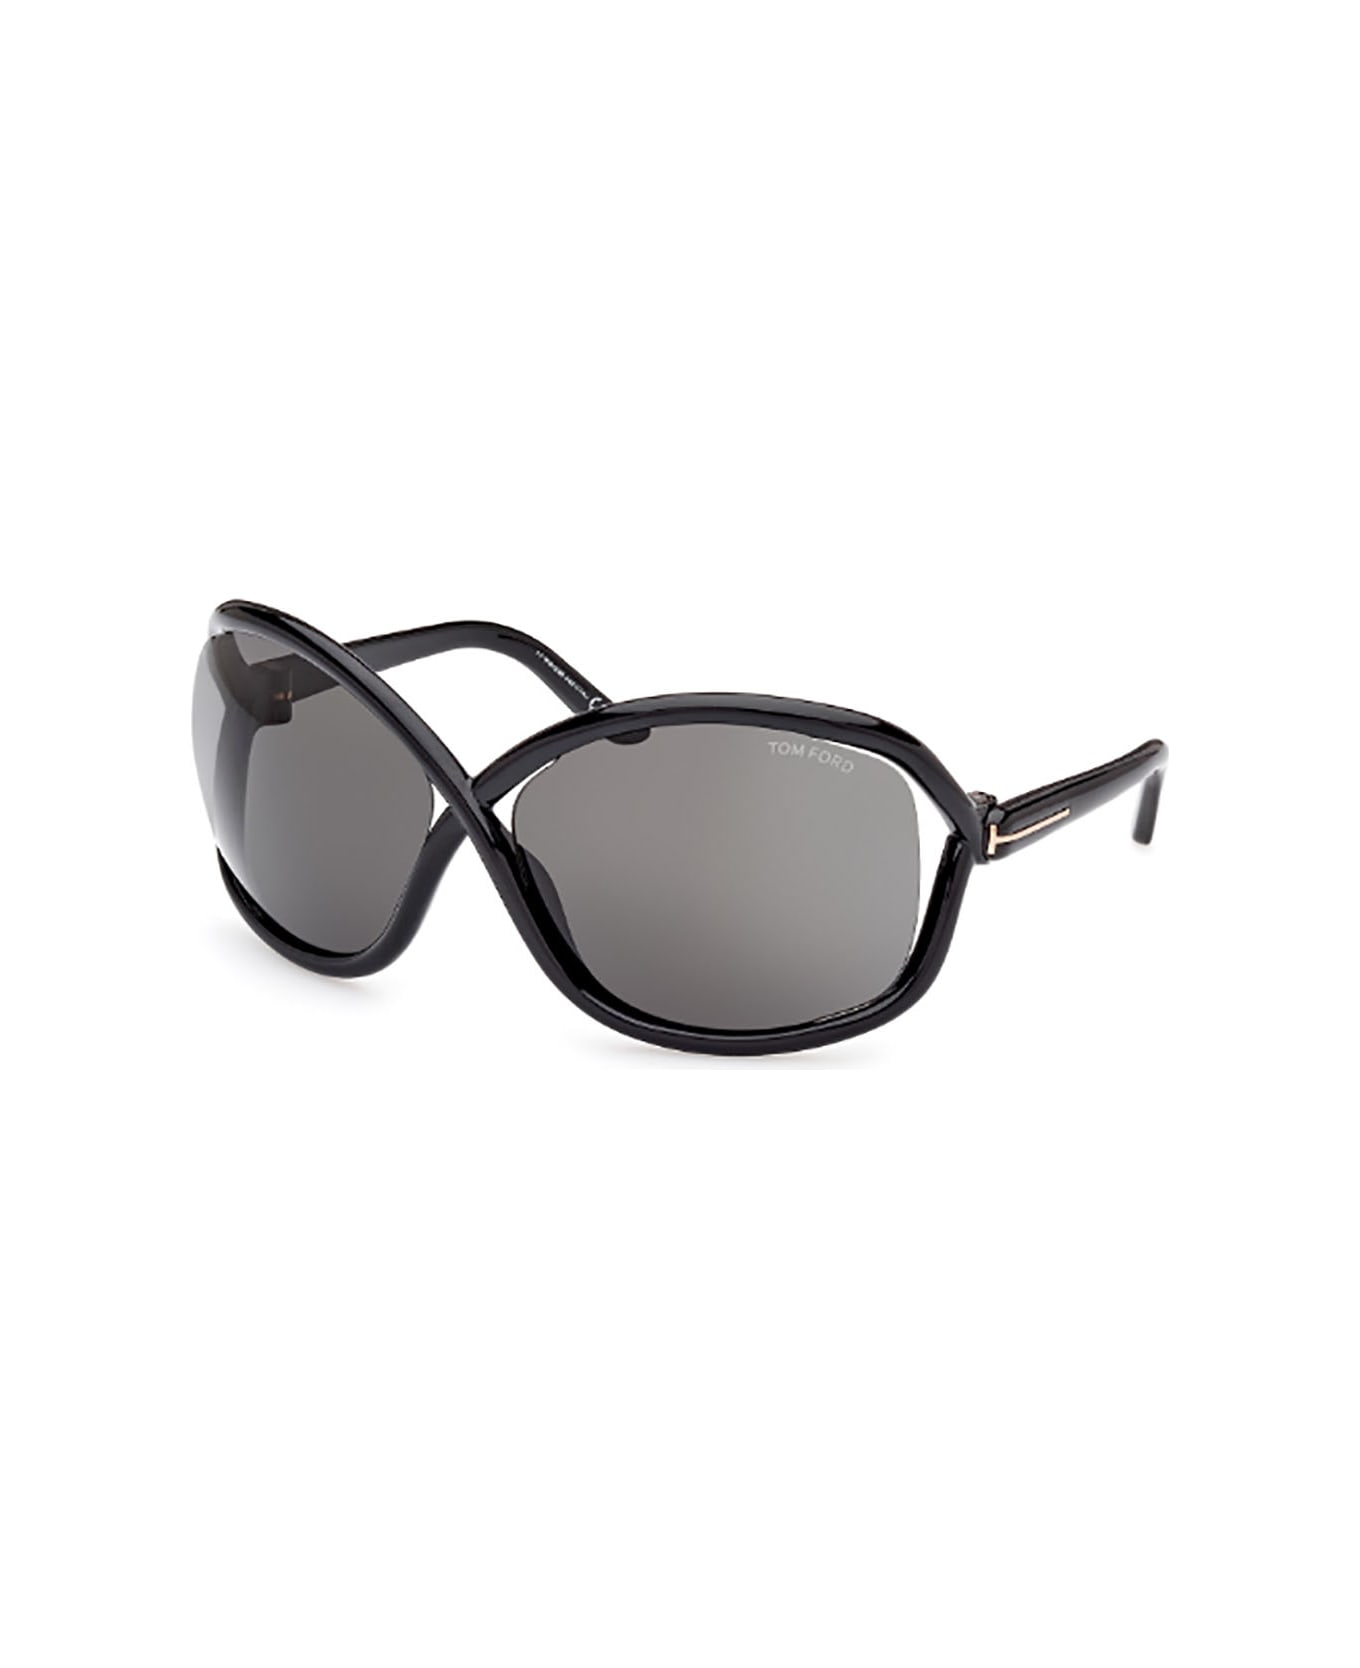 Tom Ford Eyewear FT1068 Sunglasses - A